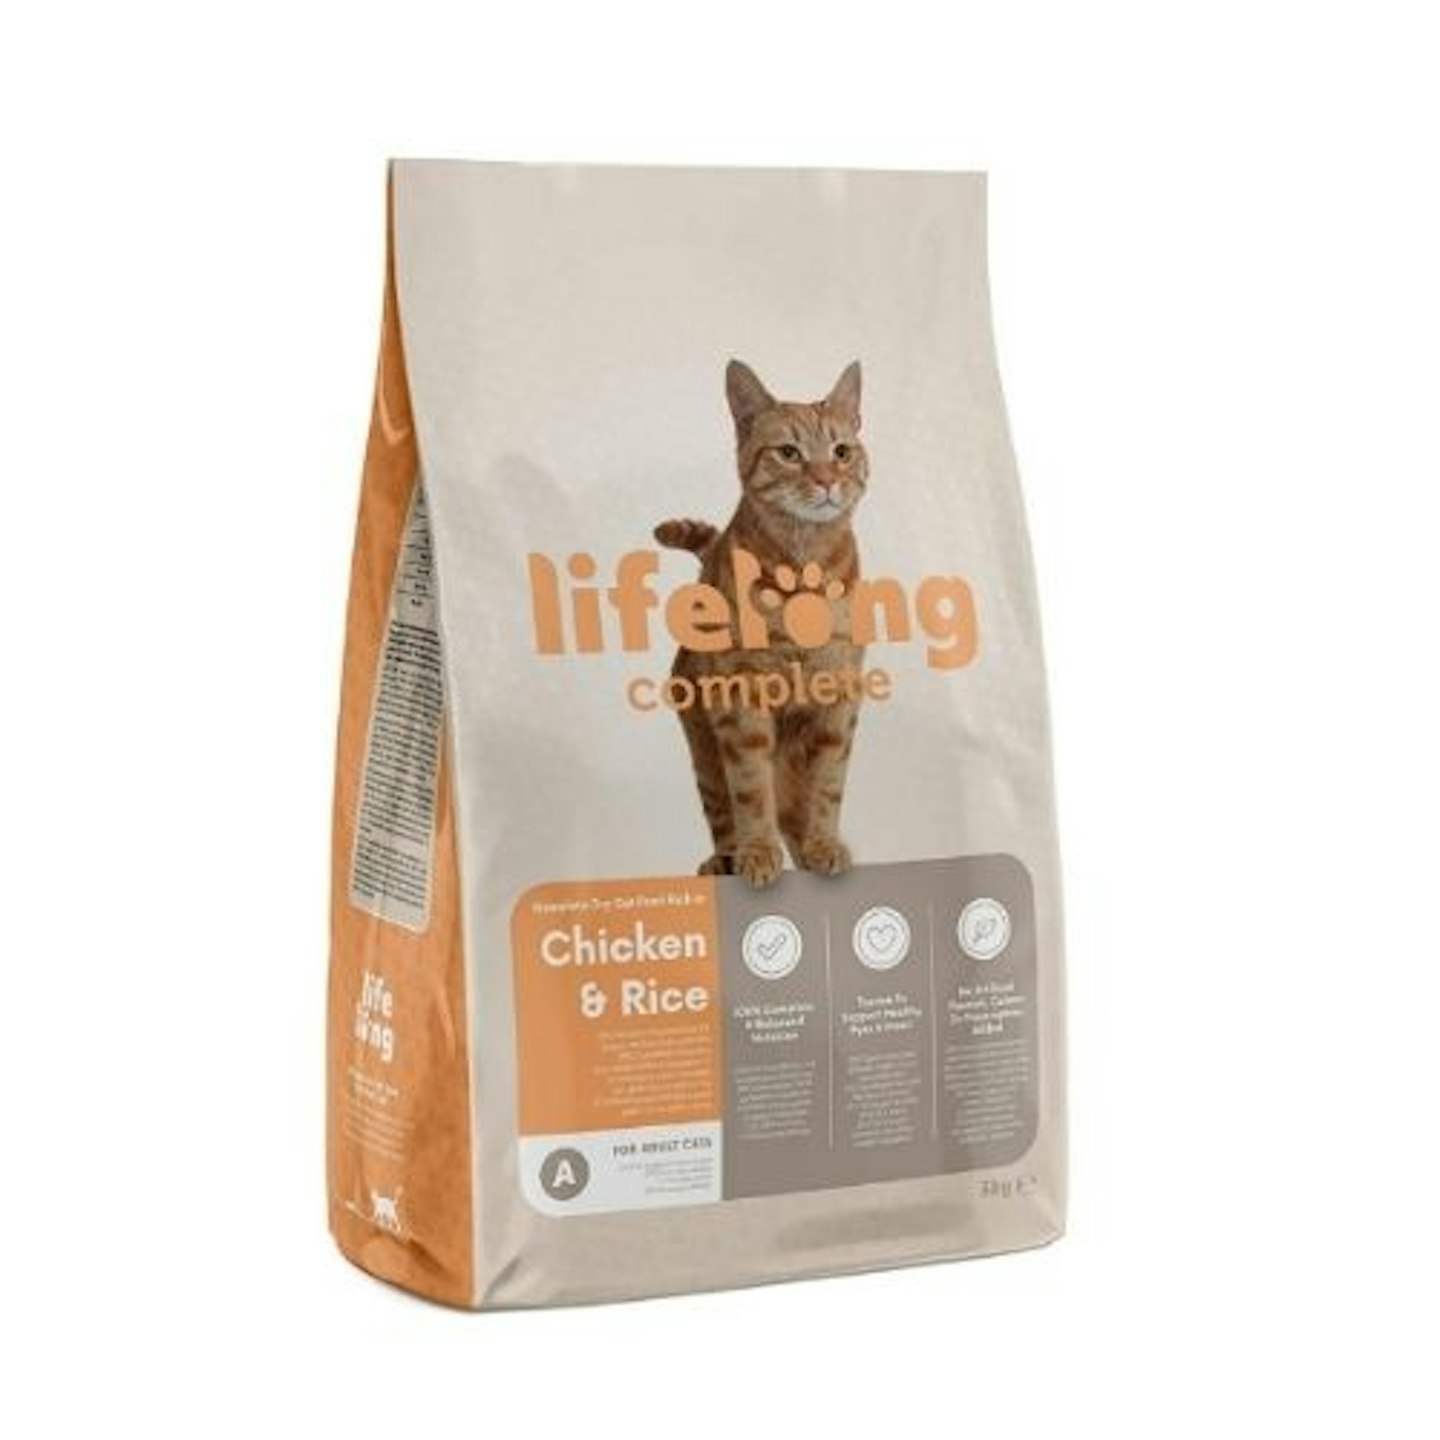 Lifelong Complete dry cat food bag